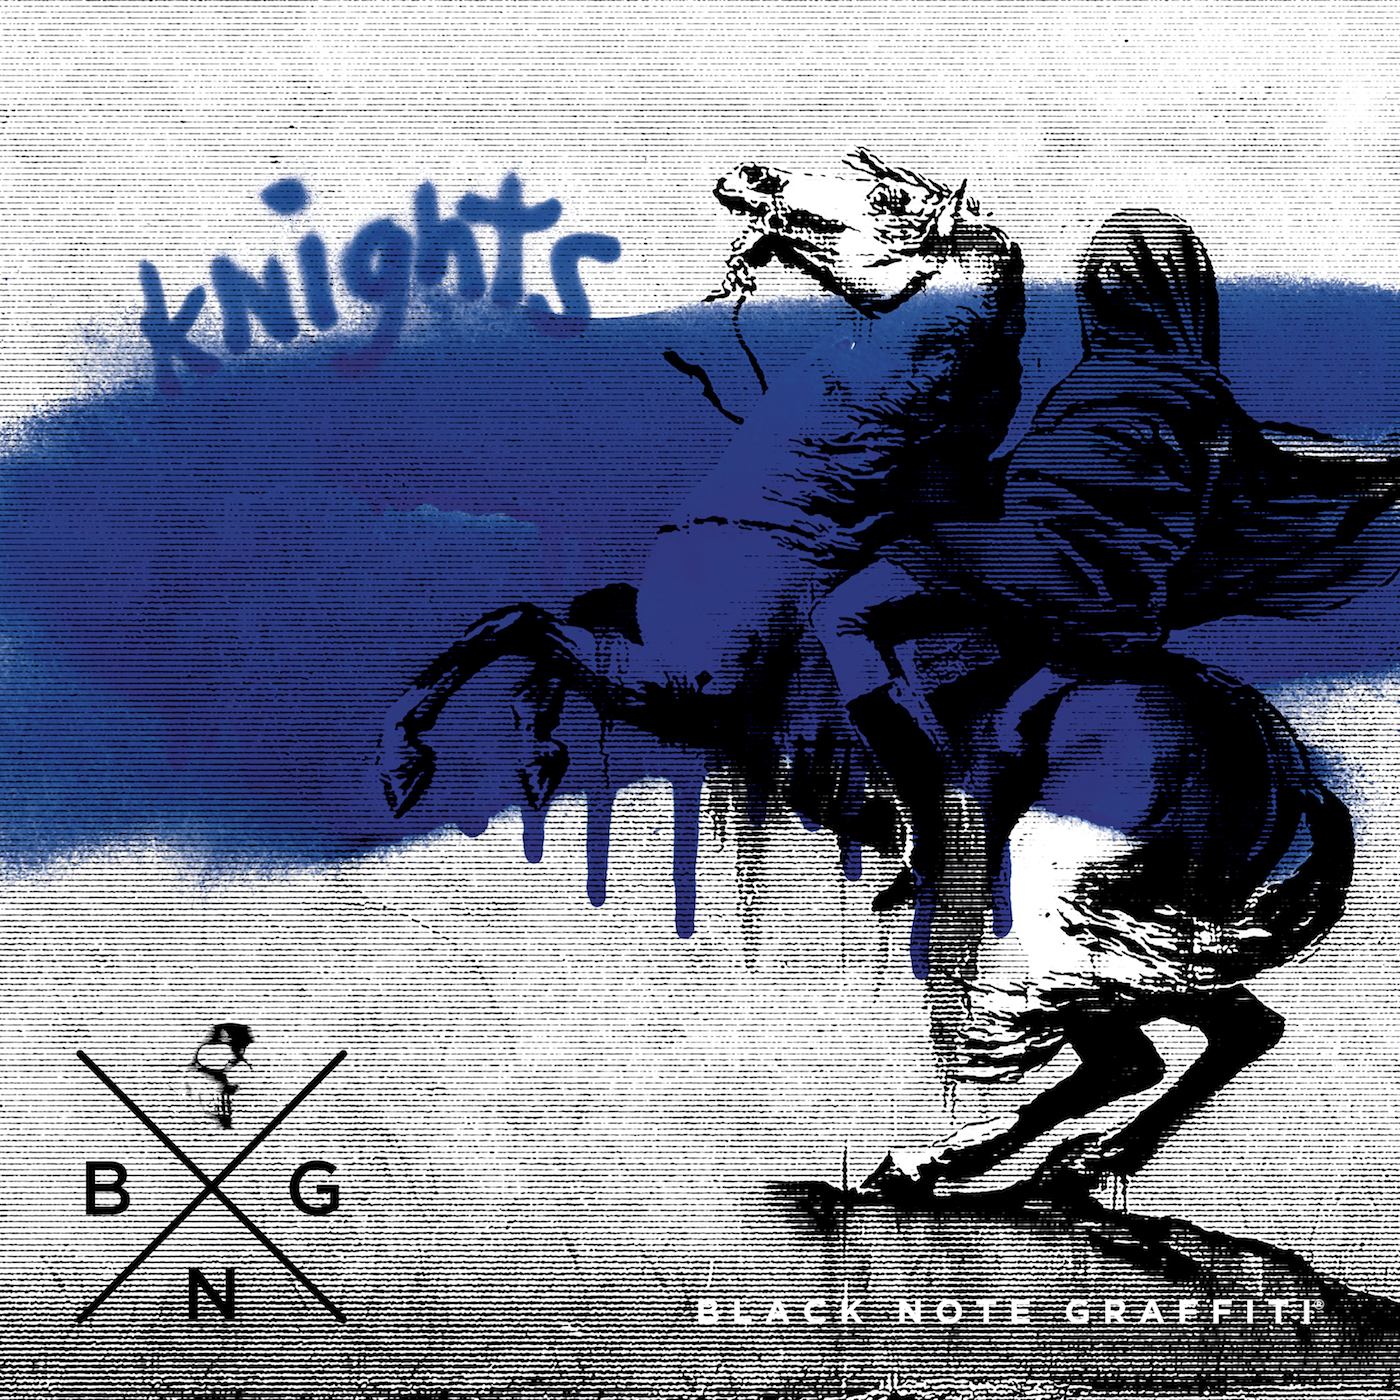 Black Night Graffiti Get Rebellious On “Knights”